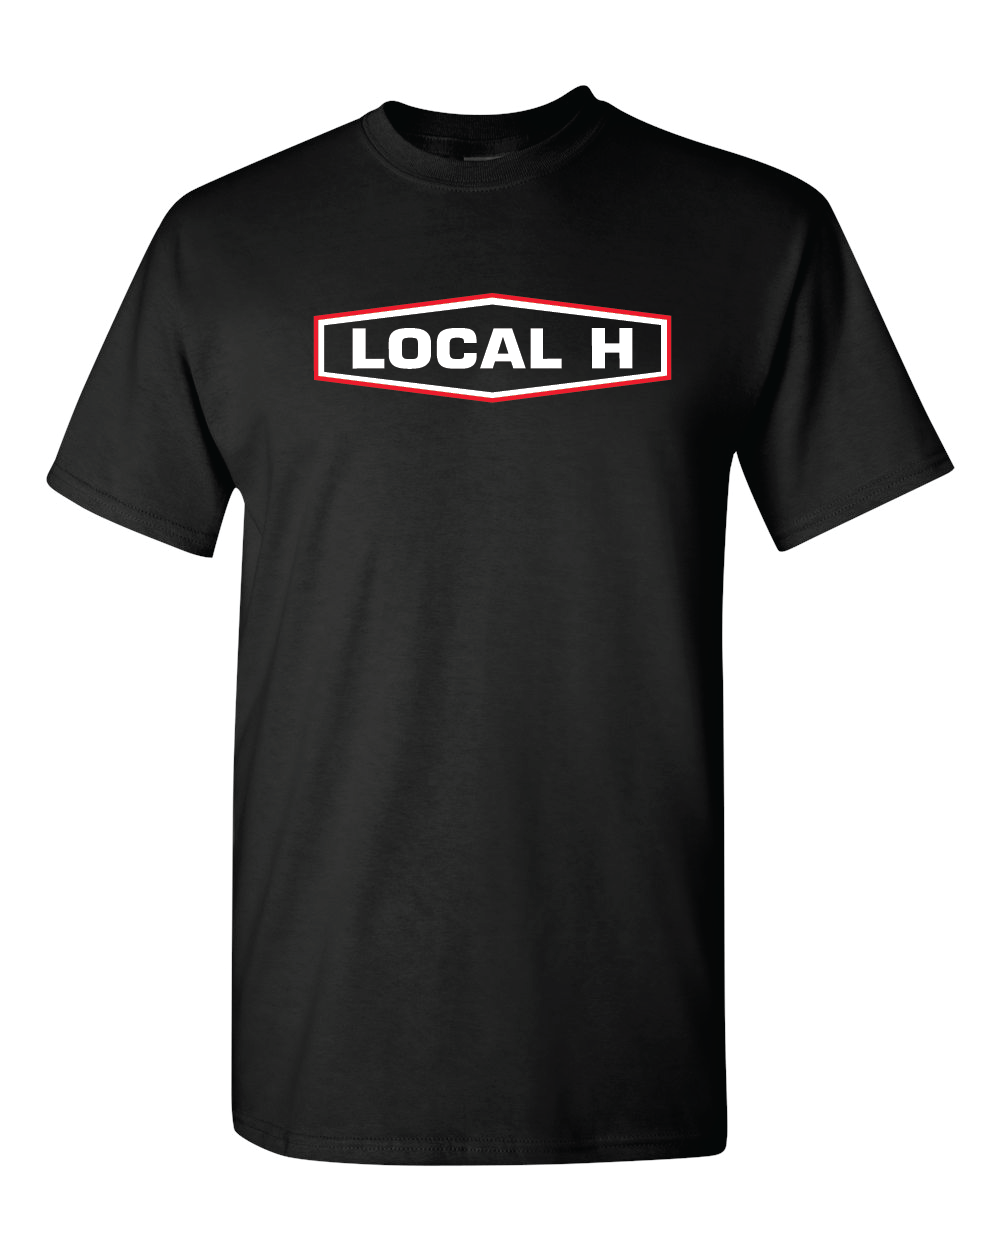 Black H Logo - Local H logo Tee shirt